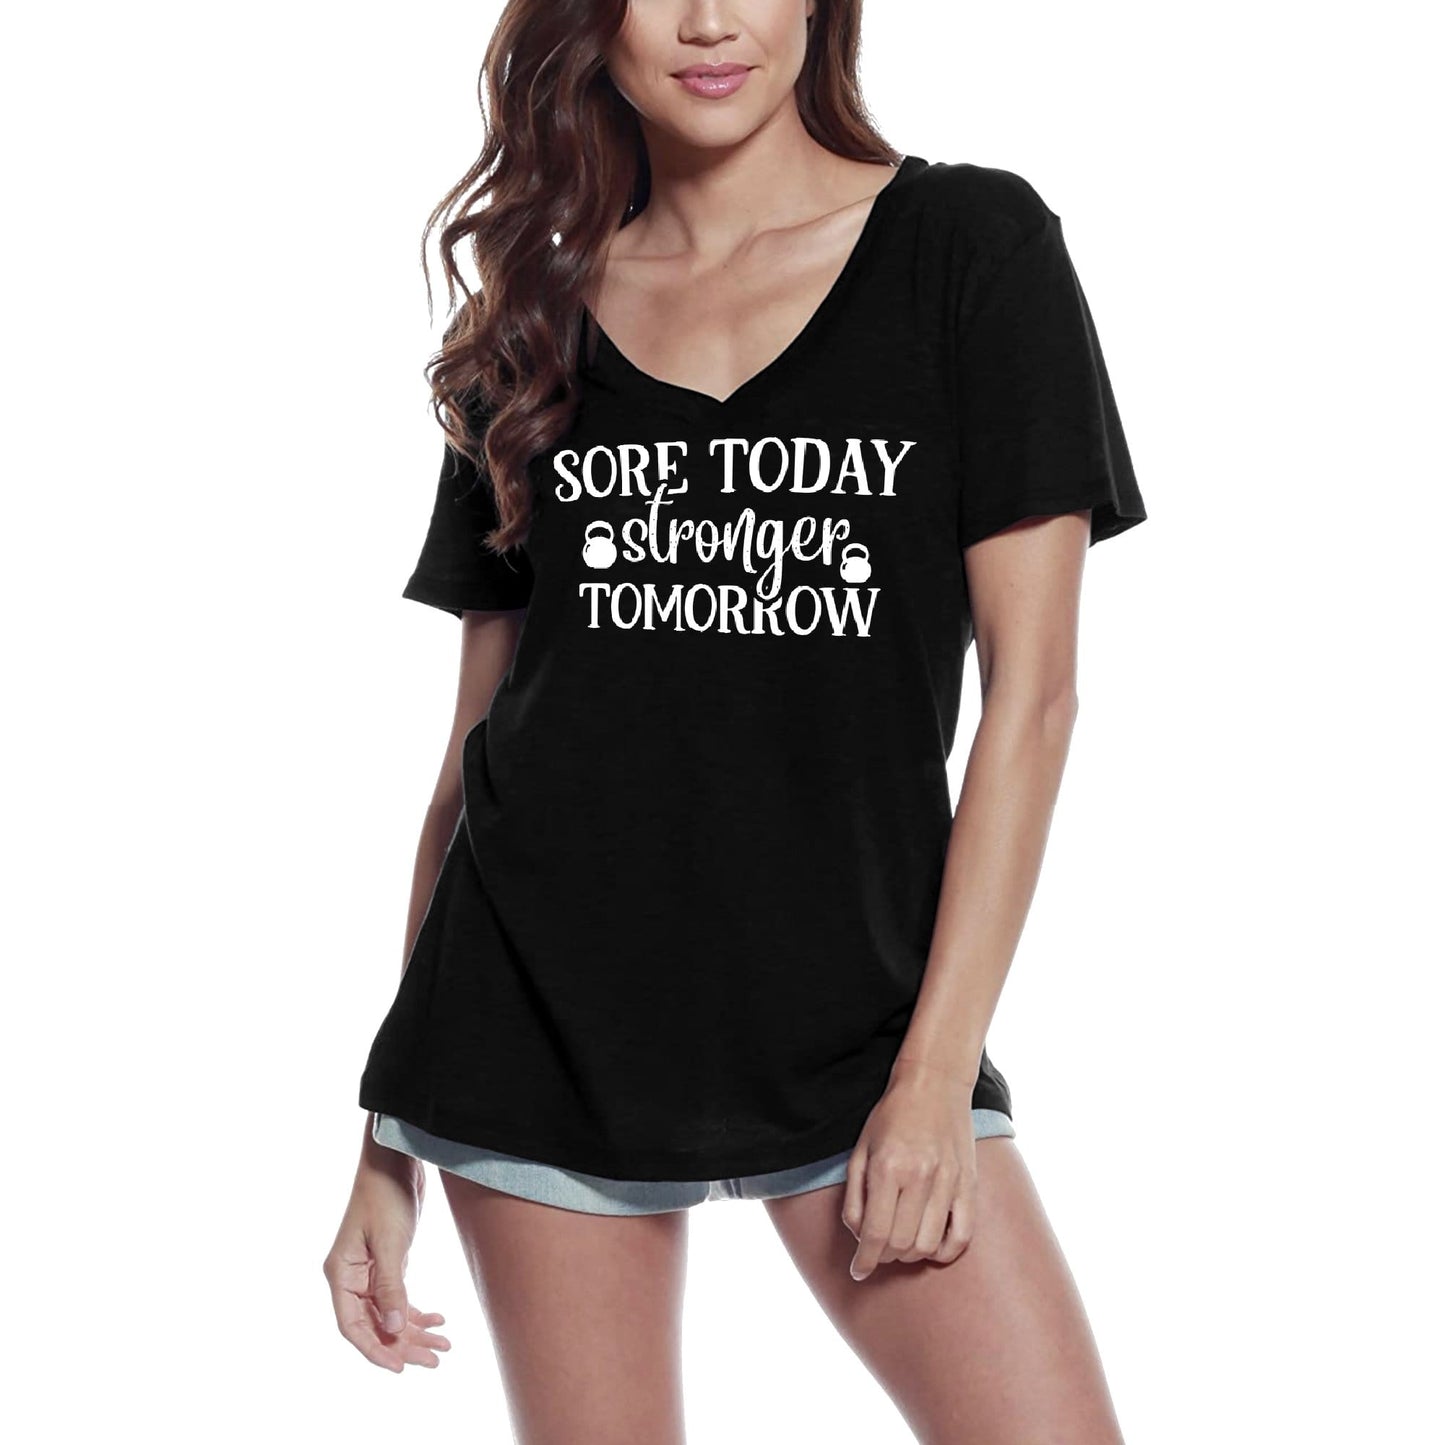 ULTRABASIC Women's Novelty T-Shirt Sore Today Stronger Tomorrow - Funny Short Sleeve Tee Shirt